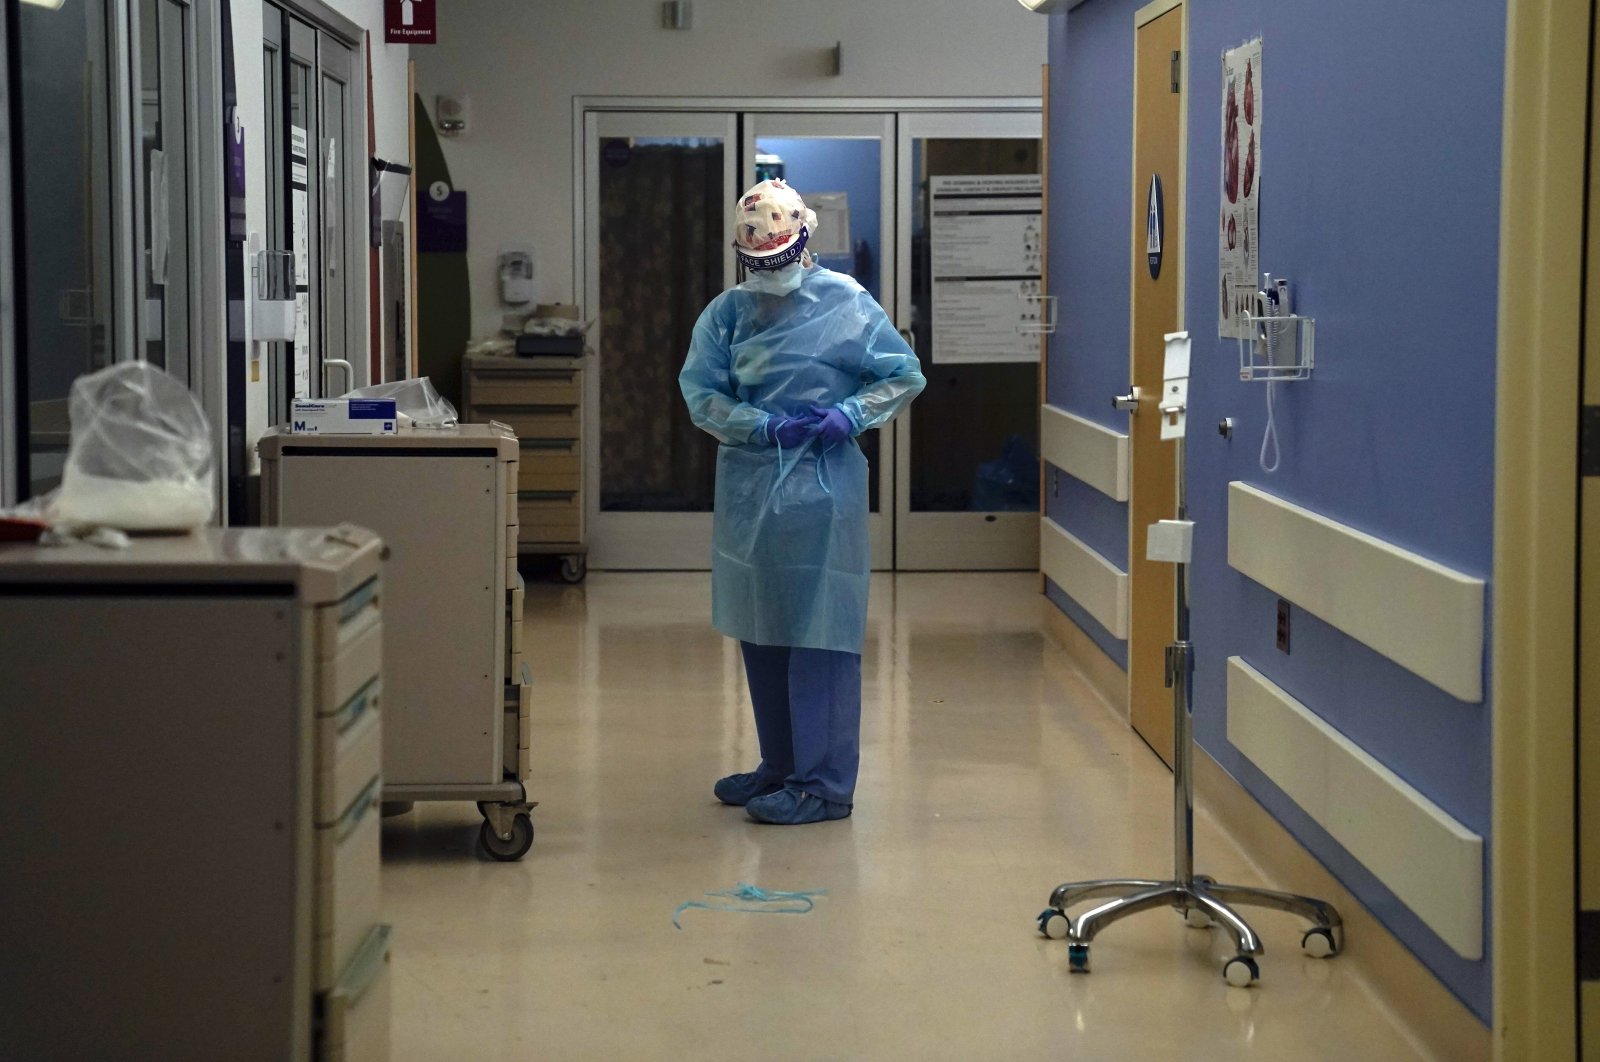 A nurse puts on protective gear in a COVID-19 unit in California, Jan. 7, 2021. (AP Photo)